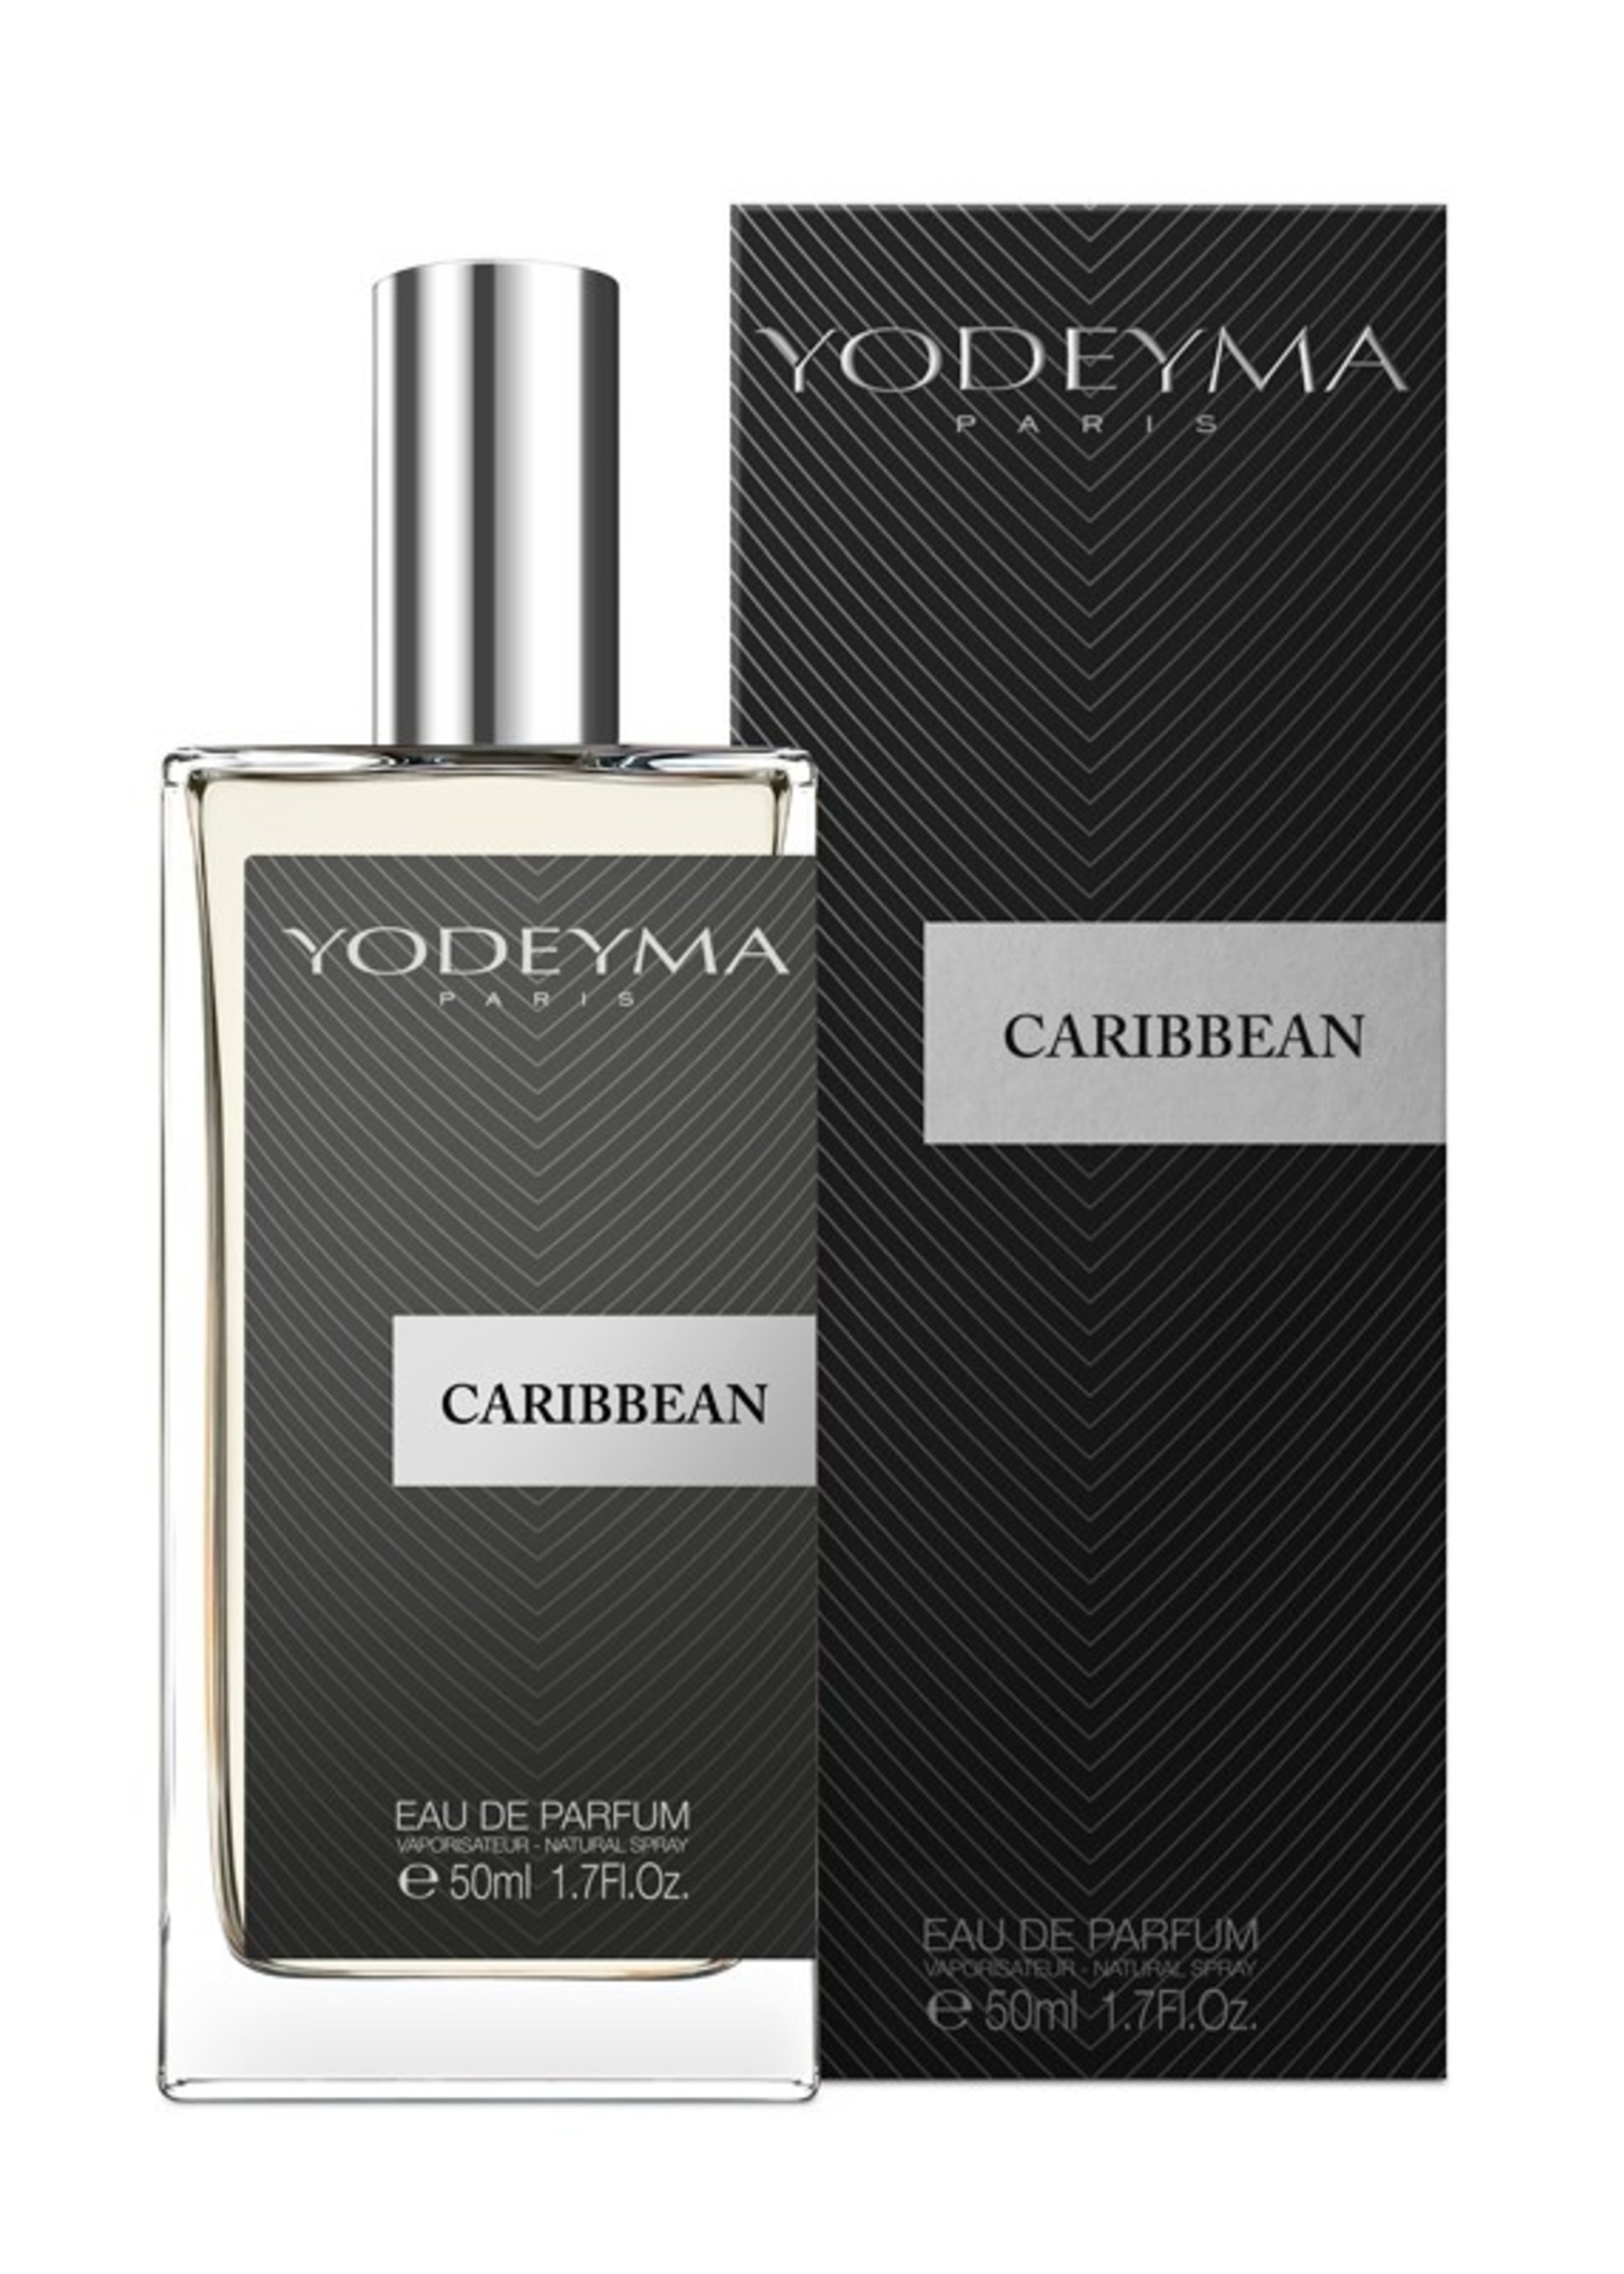 Yodeyma Parfums CARIBBEAN Eau de Parfum 50 ml.